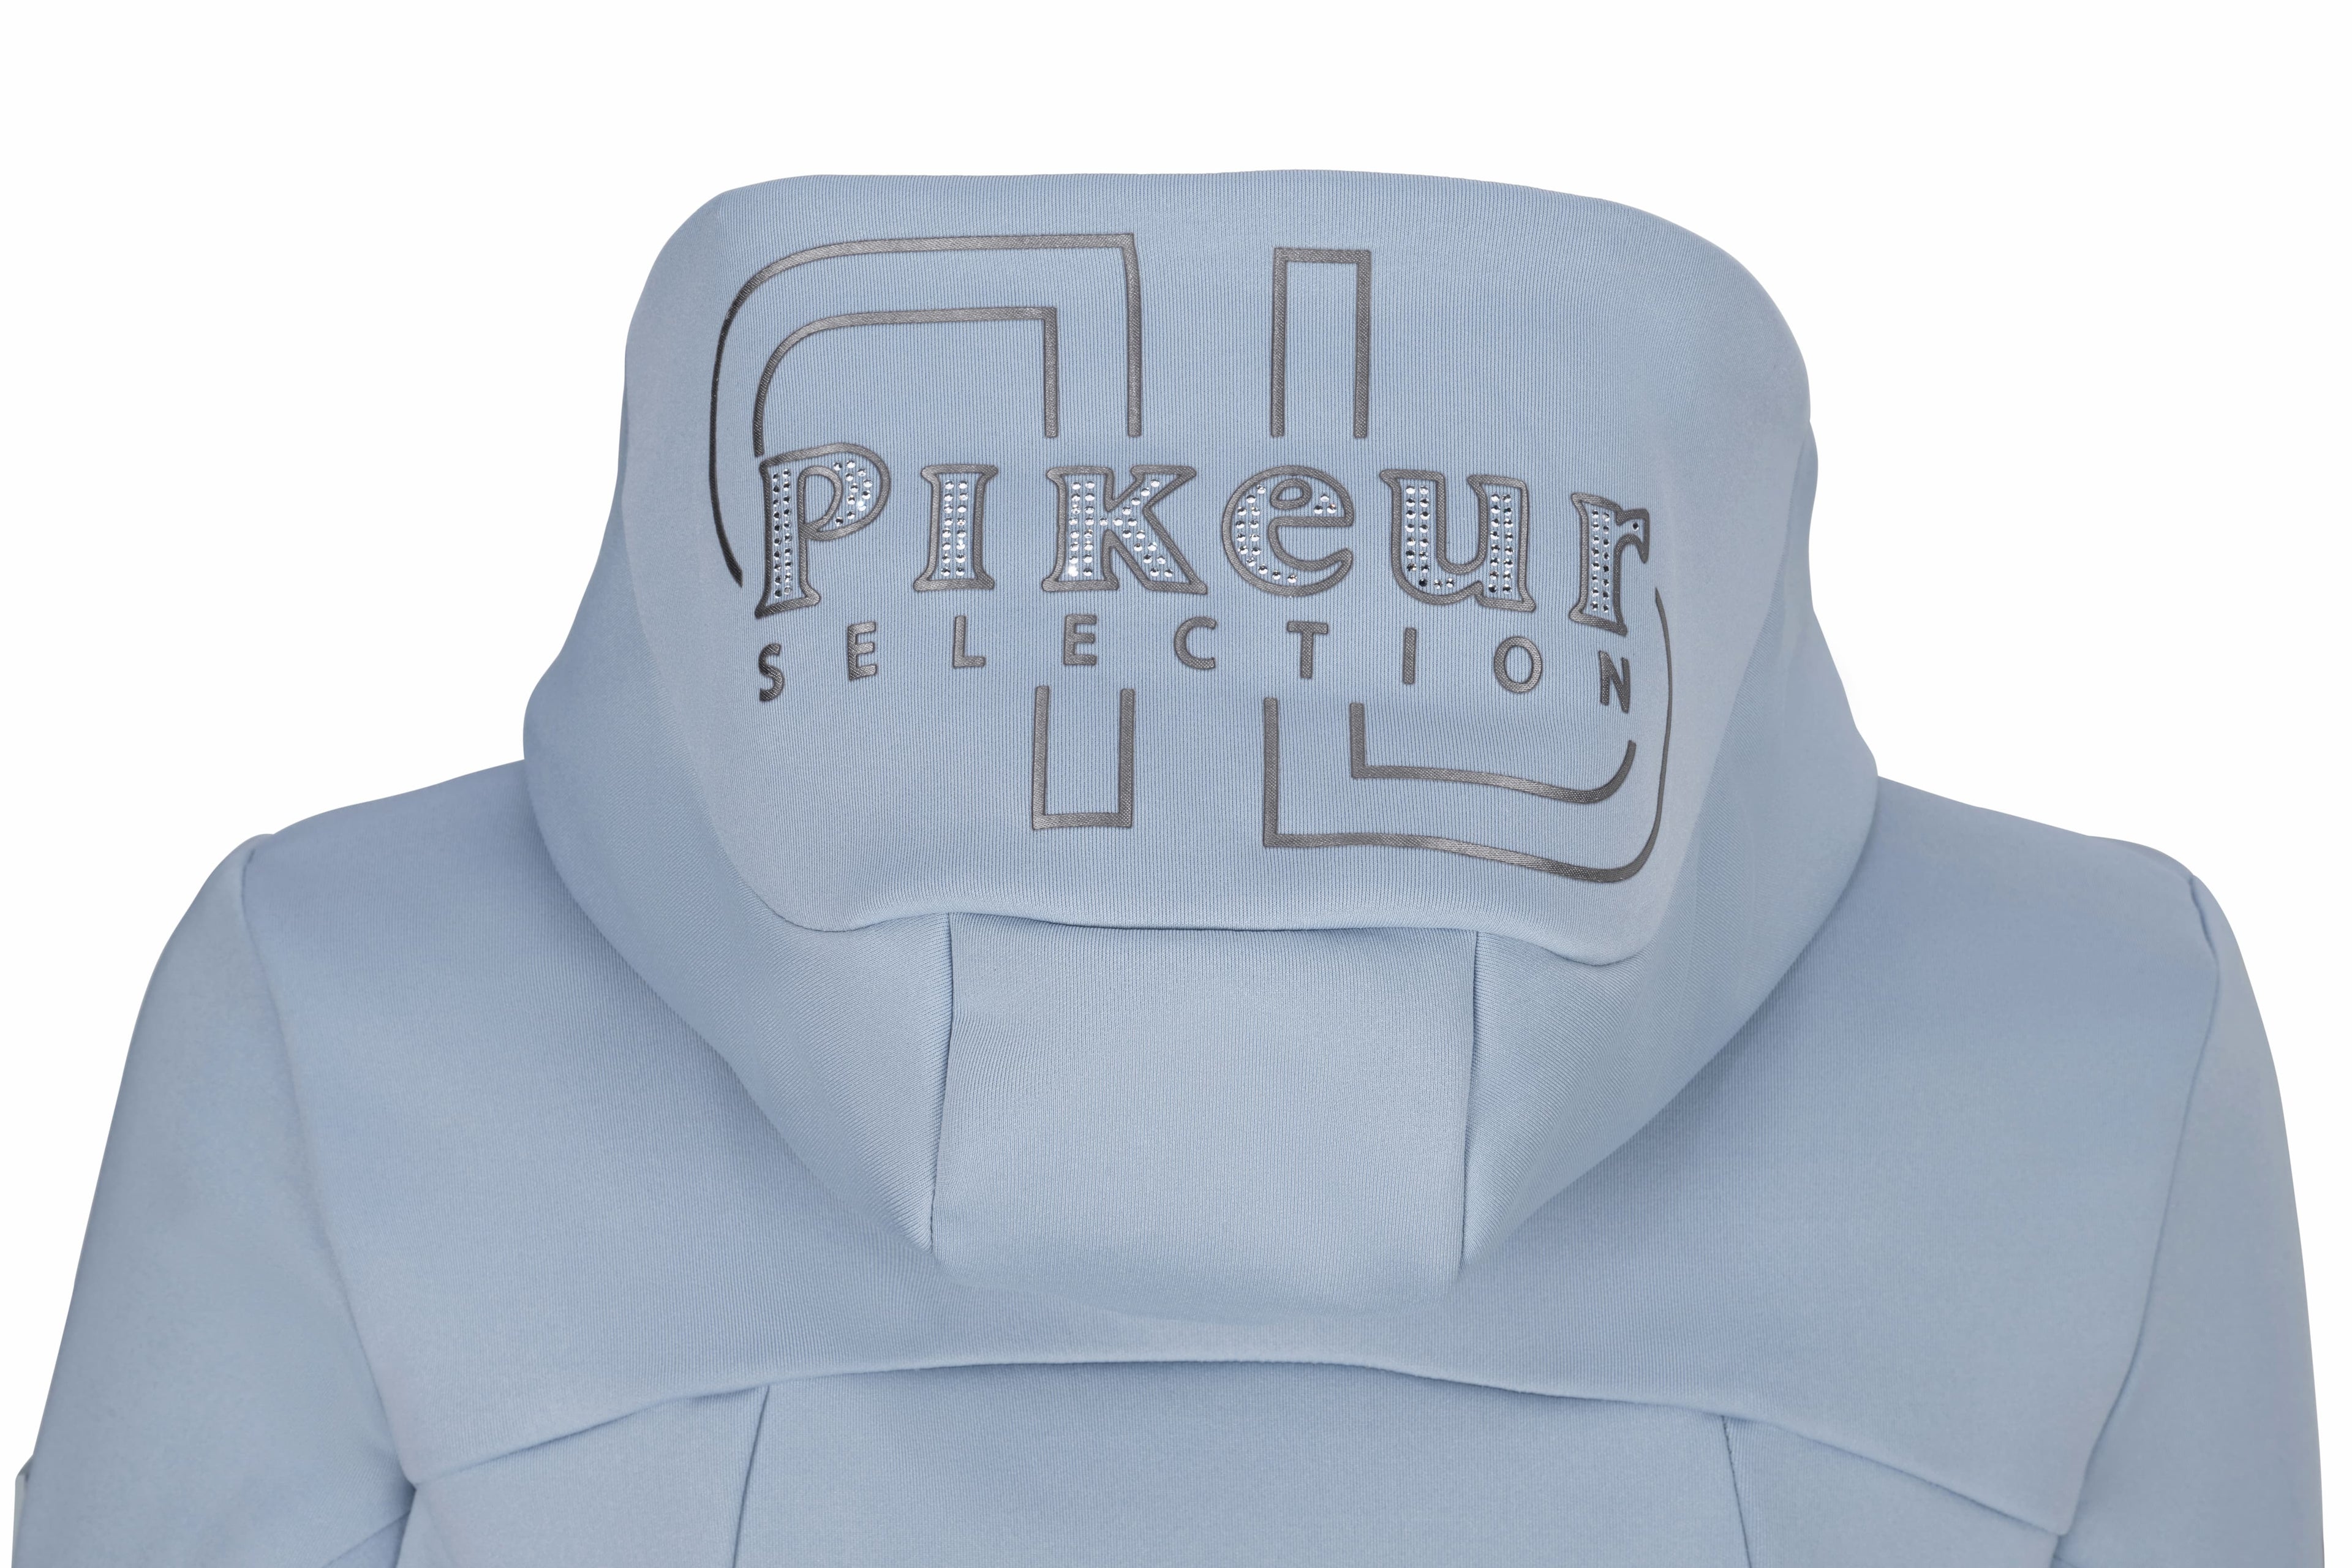 Pikeur Selection Tech Fleece Jakke, Pastel Blue